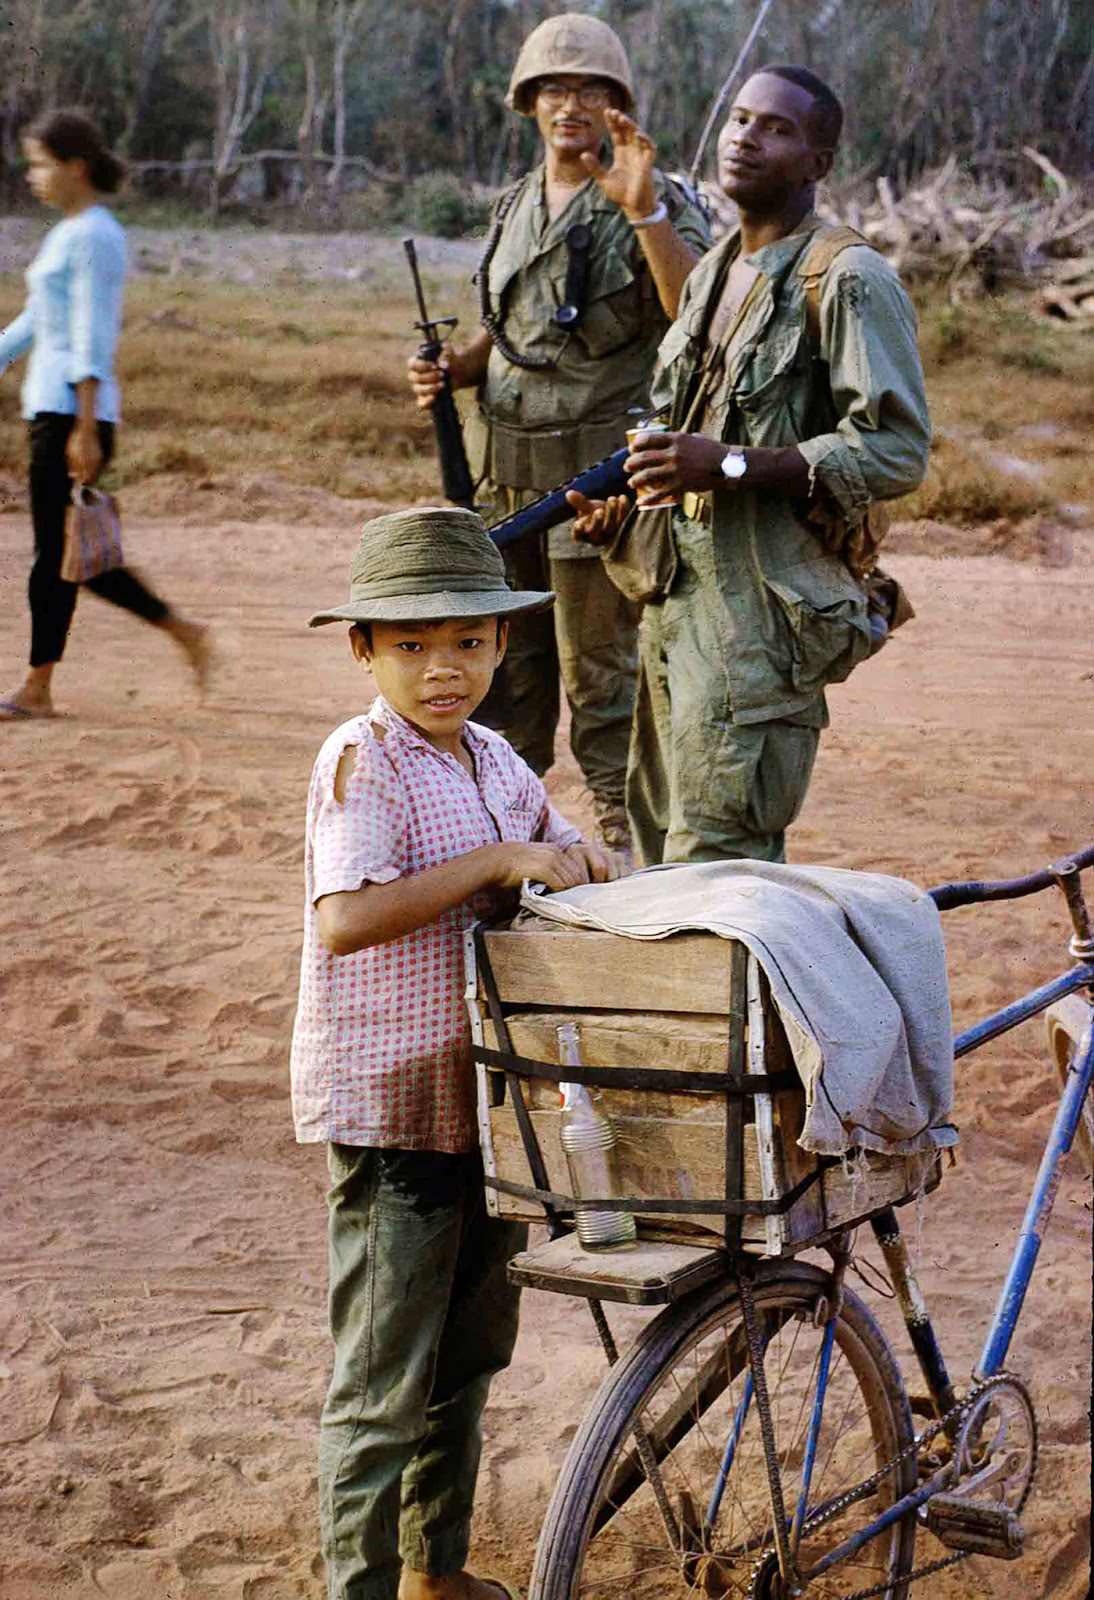 Coke kid and the photographer’s platoon leader, Lieutenant Timor, with his radio telephone operator. Vietnam. February 1969.